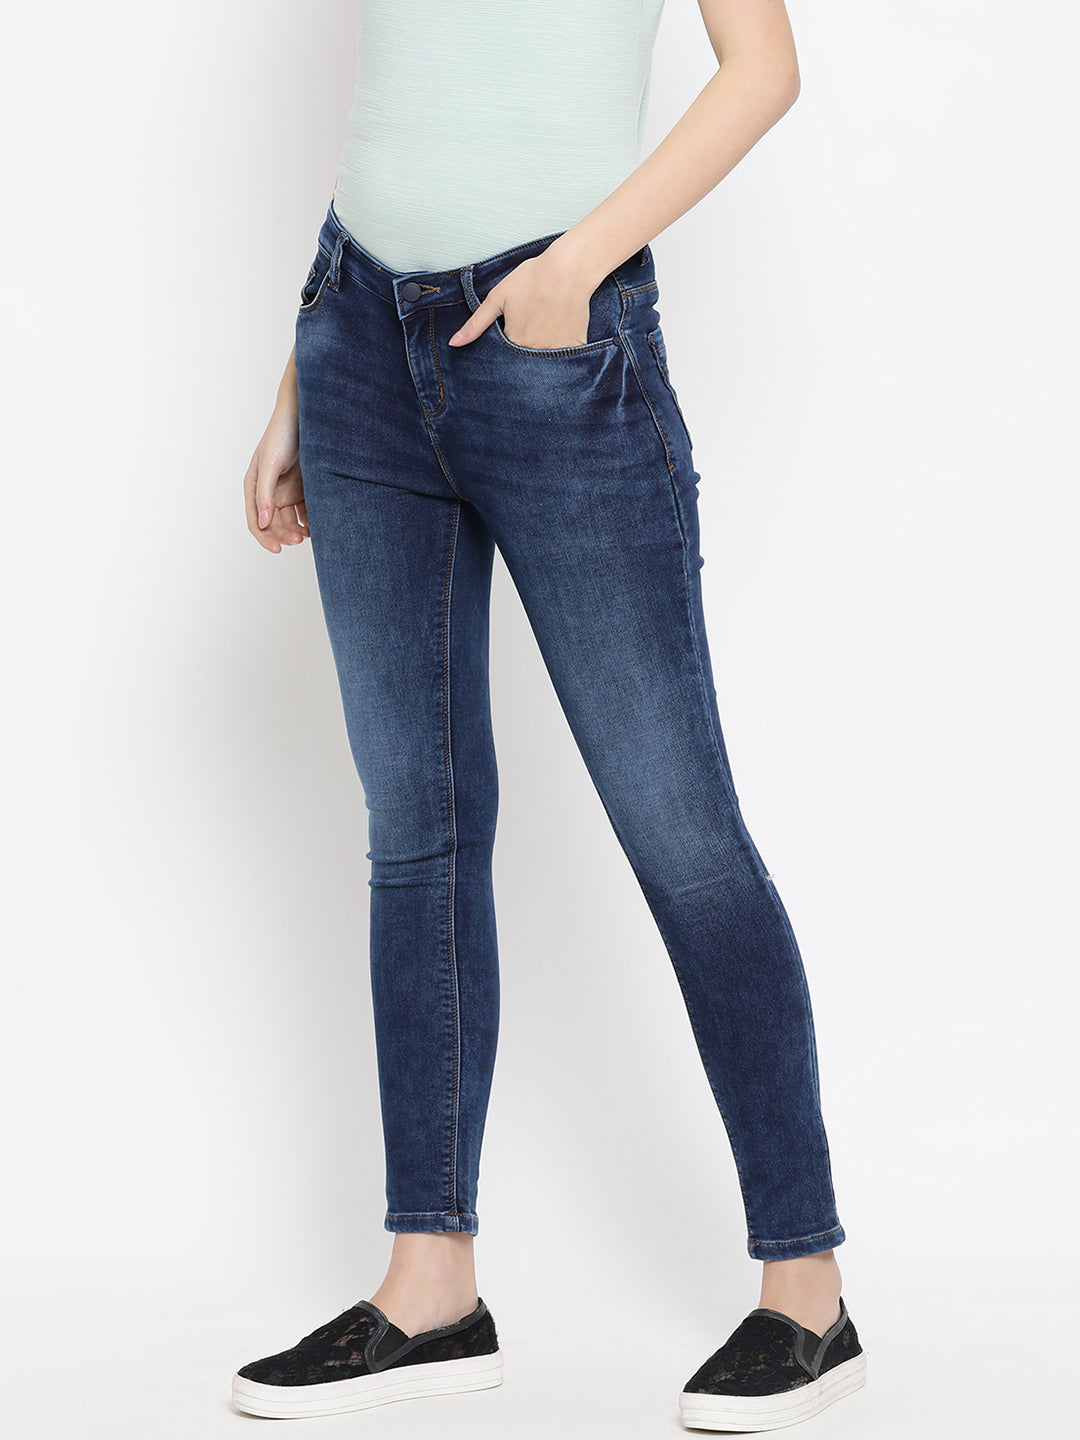 Blue Slim Fit Jeans - Women Jeans